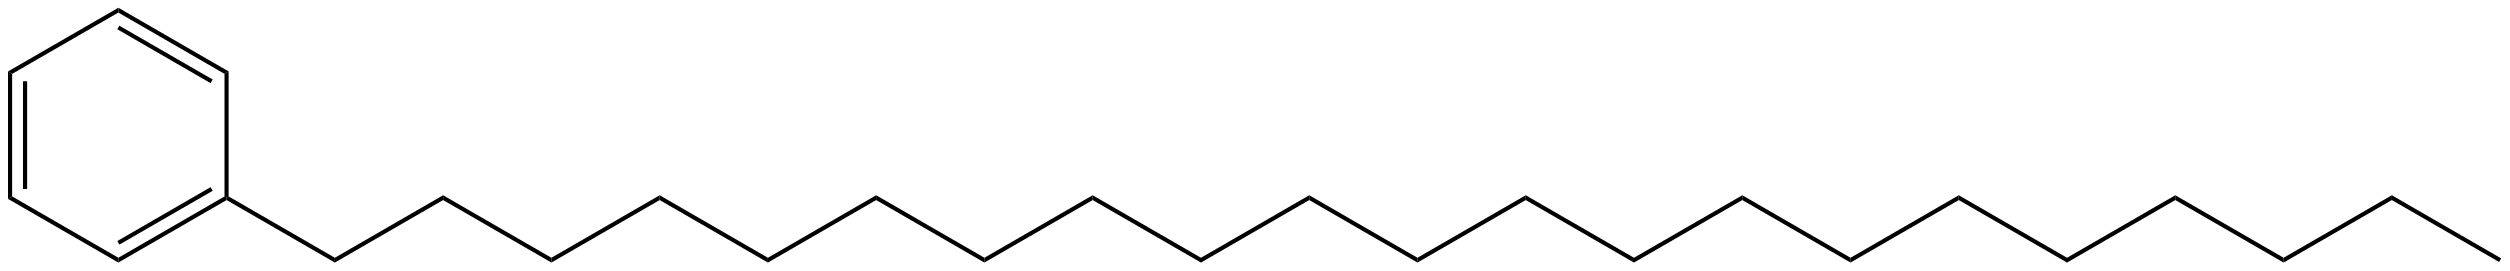 Image of benzene, heneicosyl-